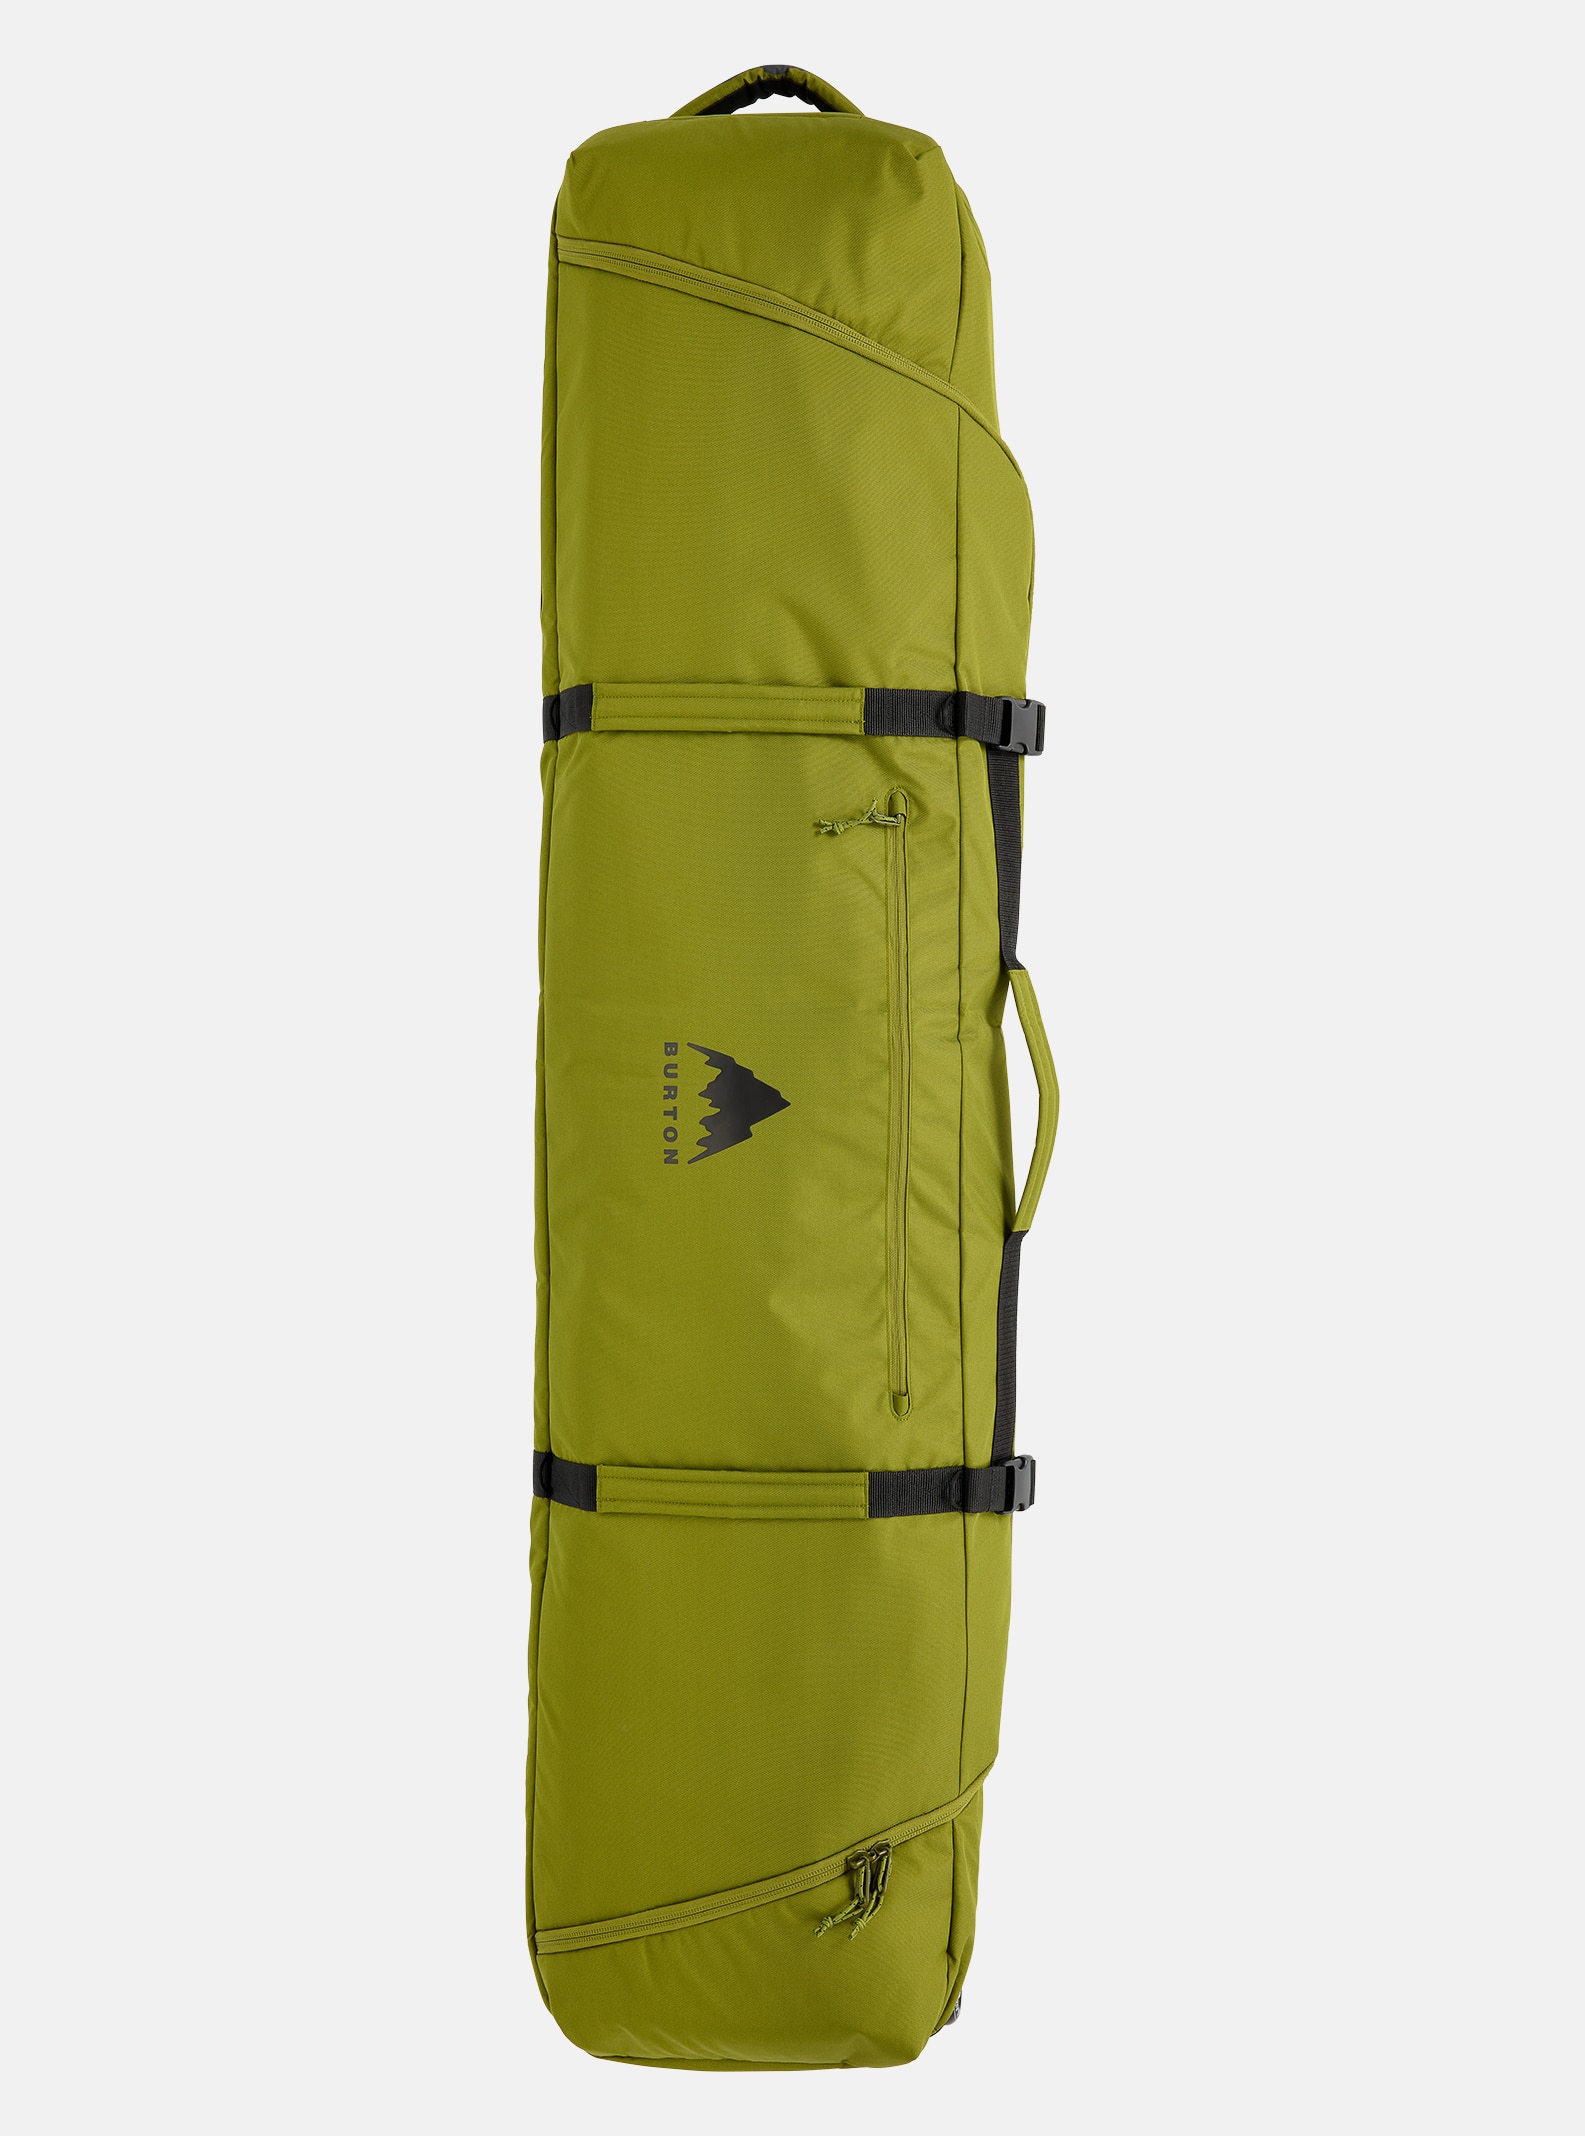 Checked Luggage | Burton Snowboards US